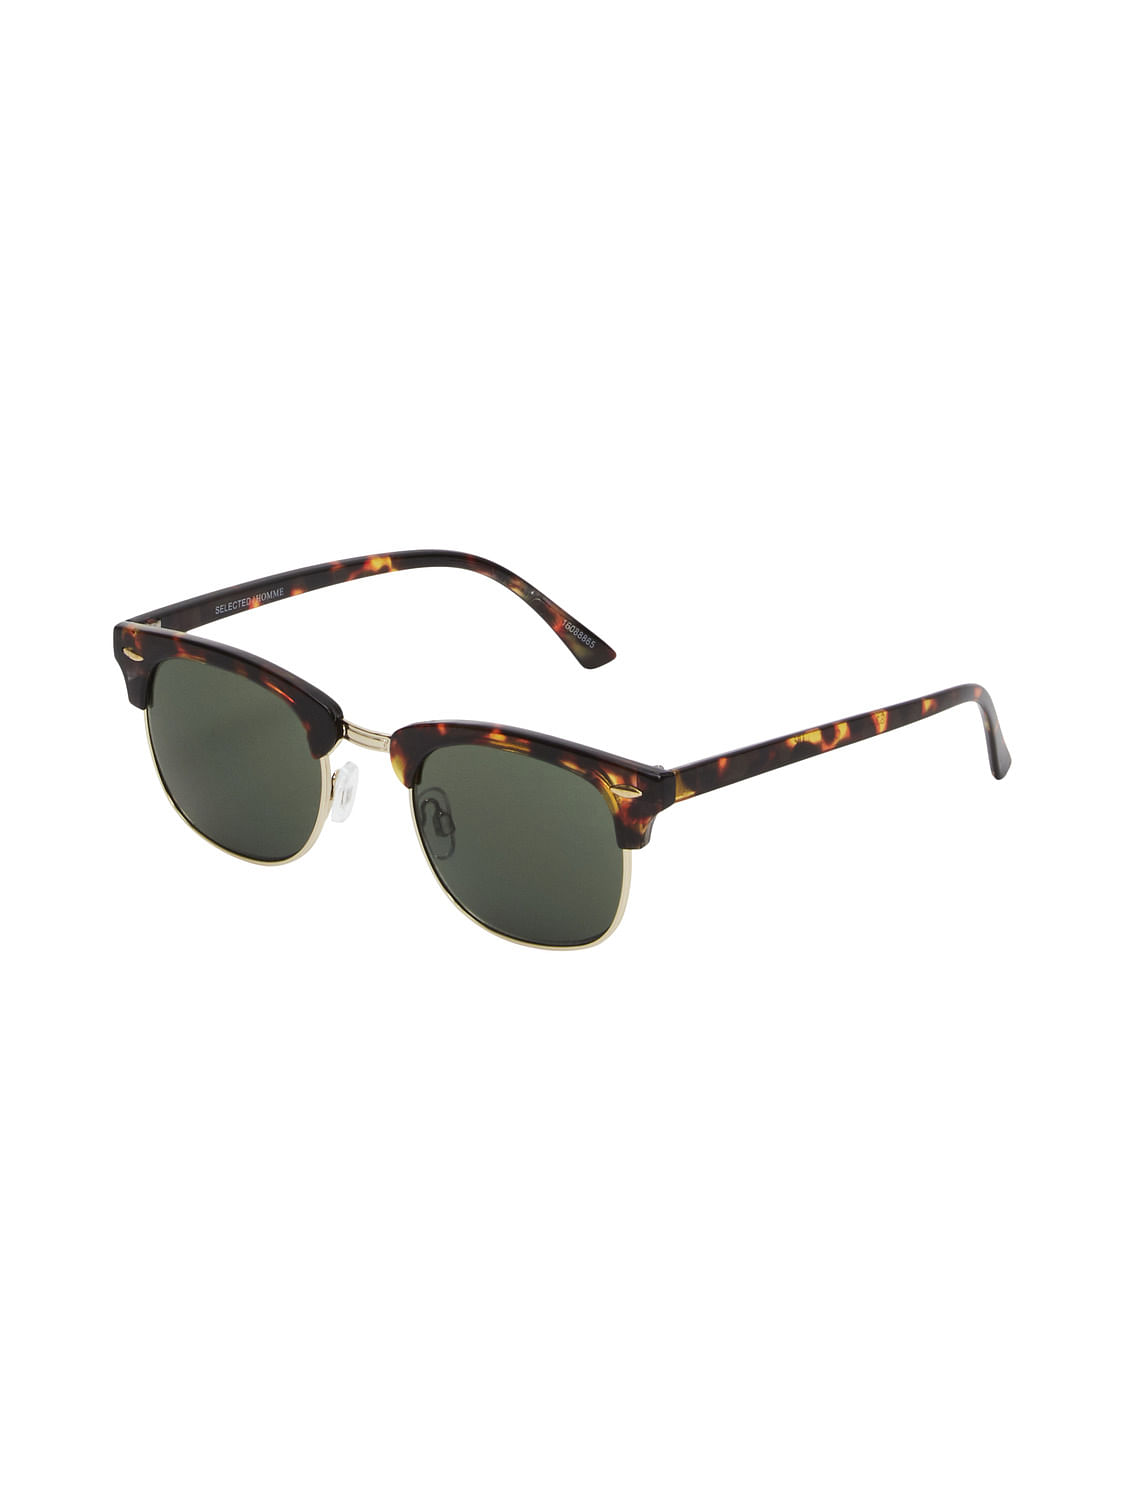 Carlton London Brown & Black Toned Uv Protected Rectangle Sunglasses F –  Carlton London Online